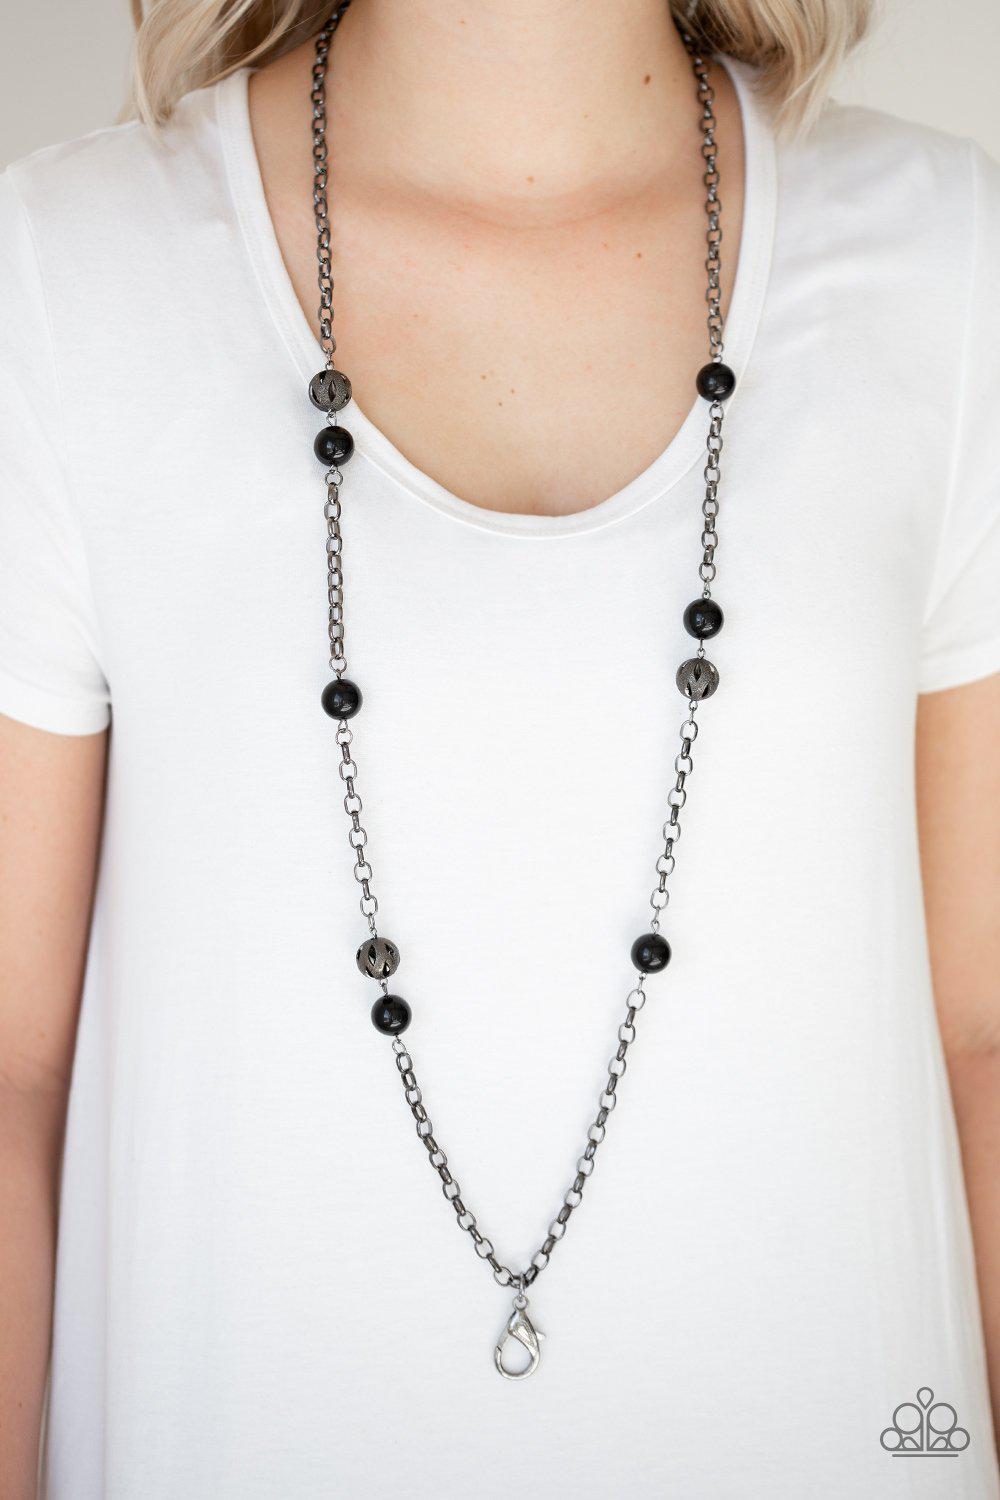 Fashion Fad Black Lanyard Necklace - Paparazzi Accessories - model -CarasShop.com - $5 Jewelry by Cara Jewels